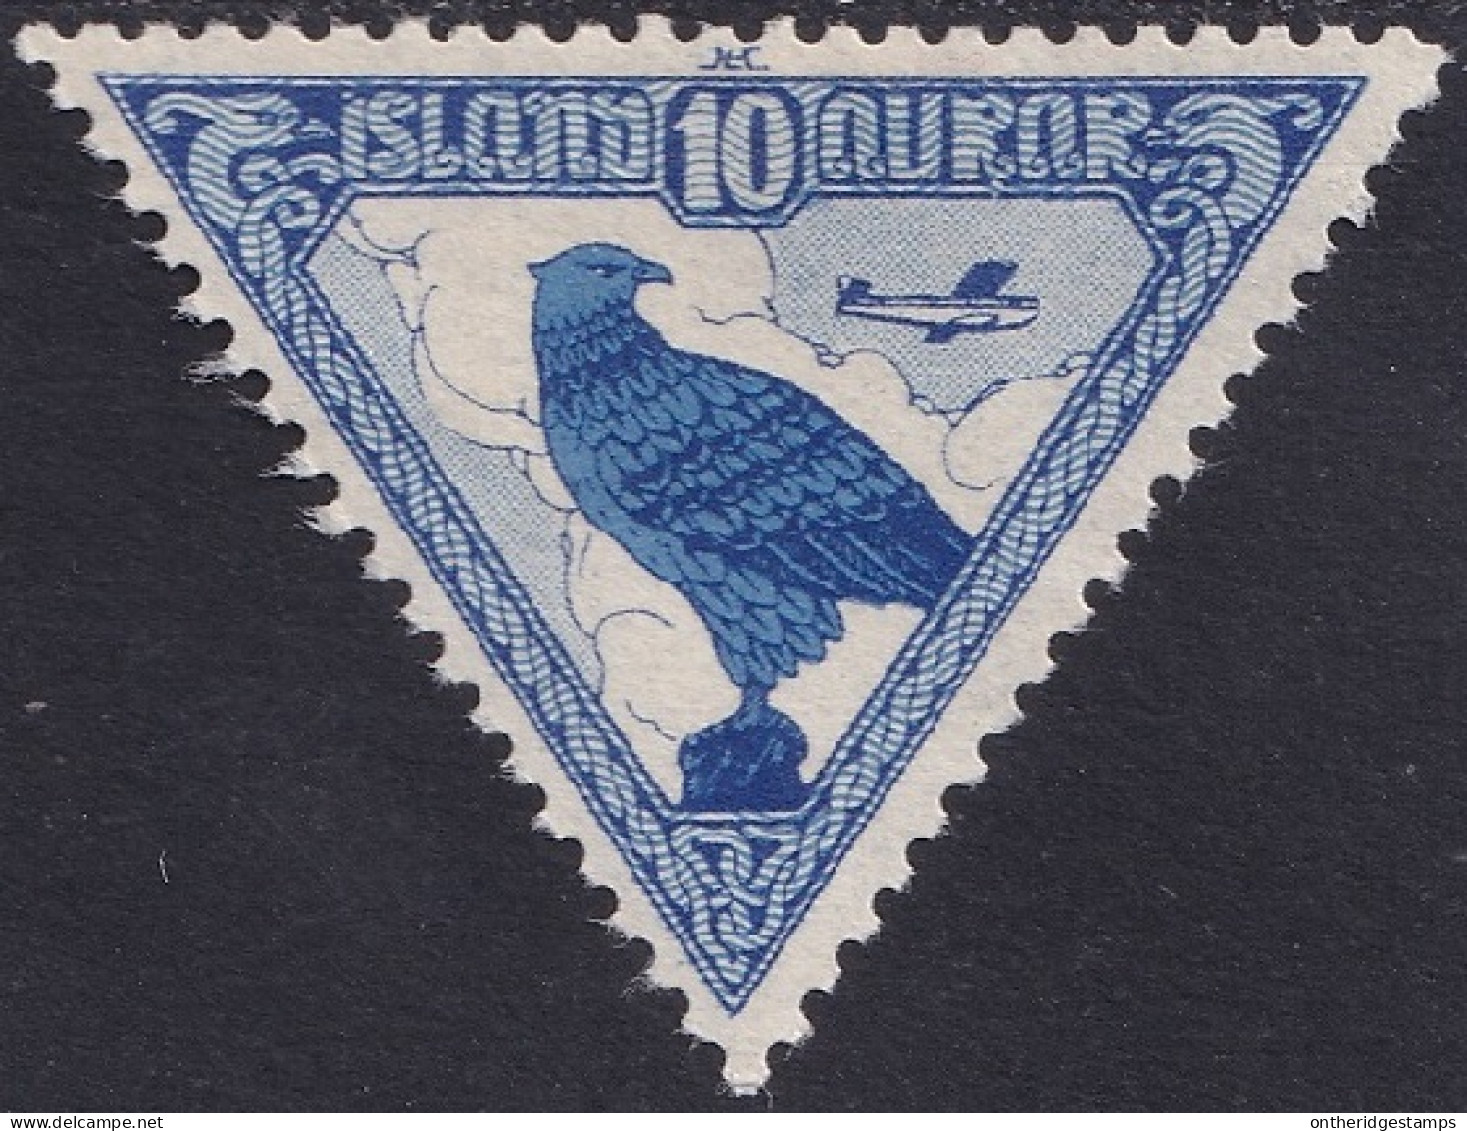 Iceland 1930 Sc C3  Air Post MLH* - Airmail